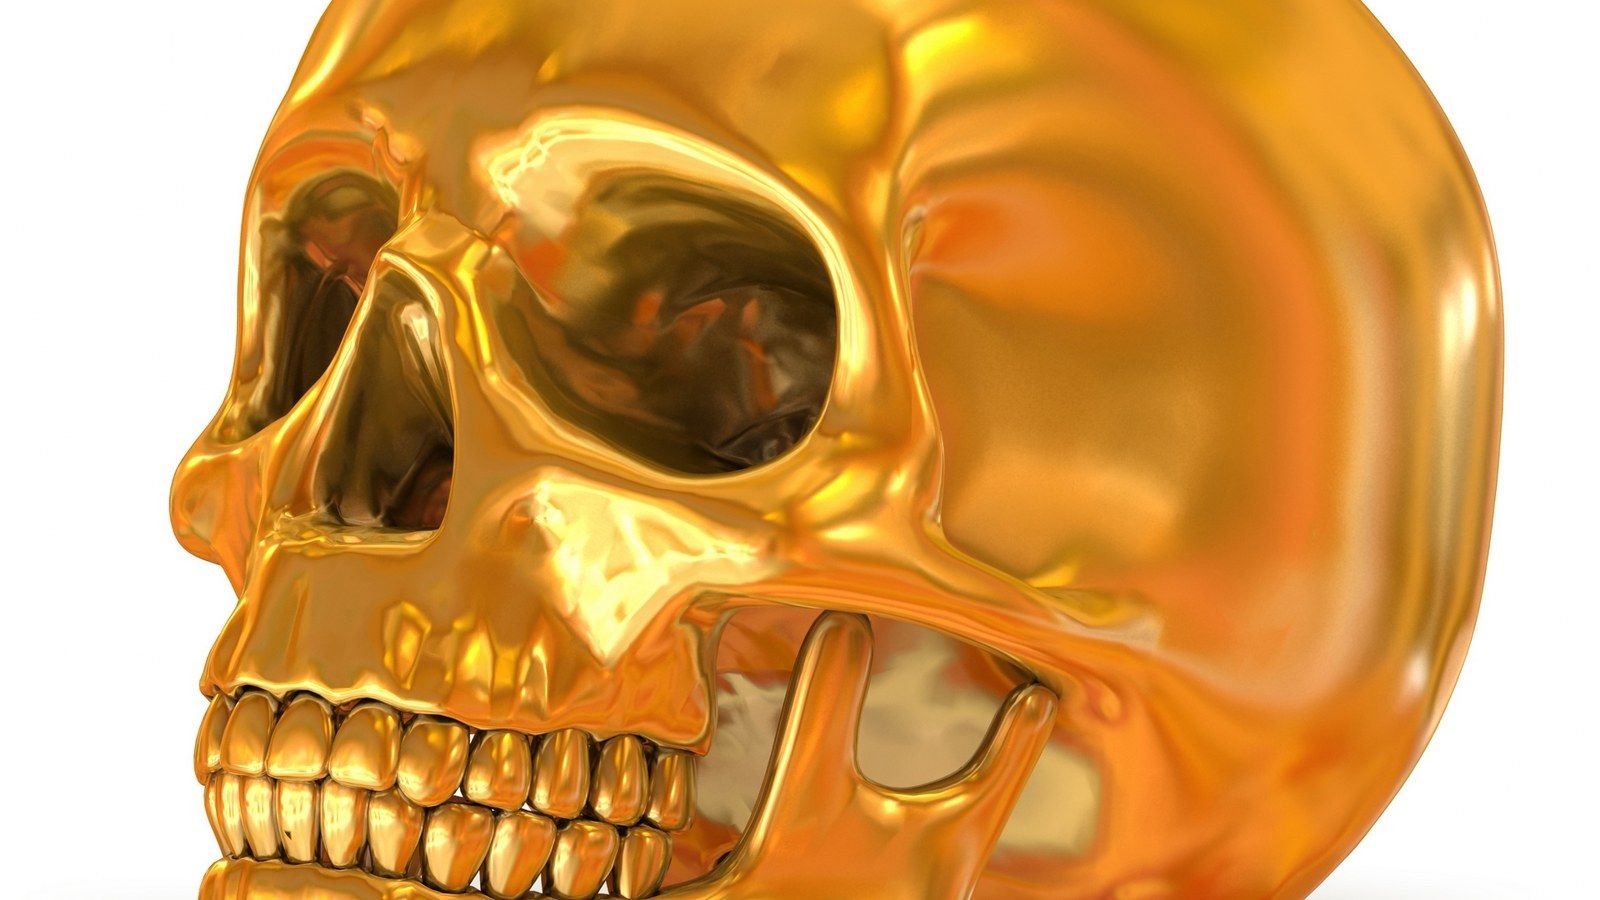 Free download Head Skull Gold Abstract wallpaper55com Best